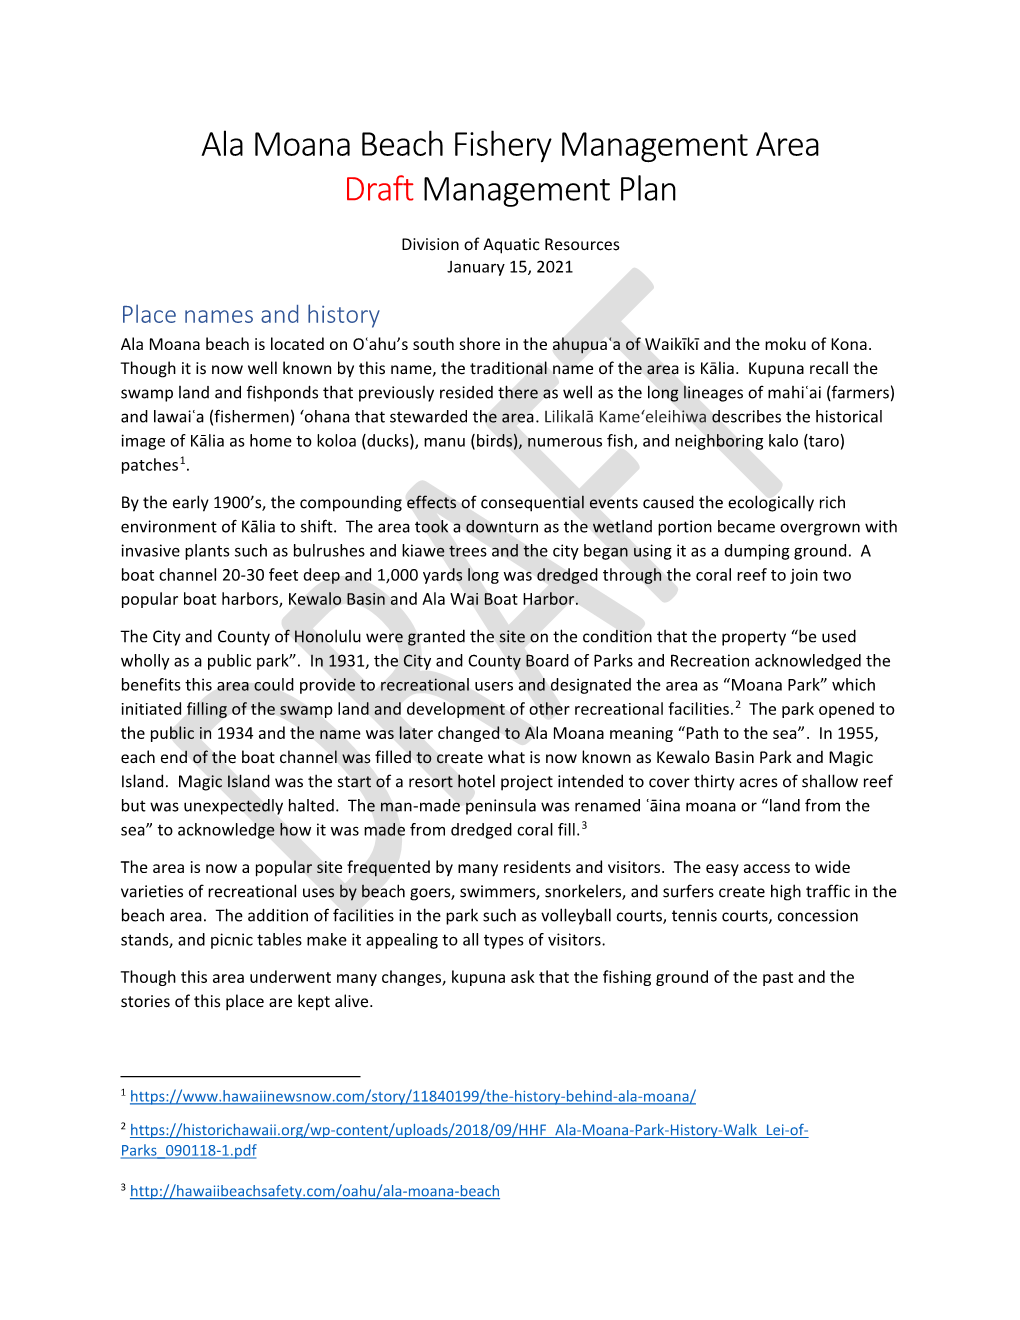 Ala Moana Beach Fishery Management Area Draft Management Plan